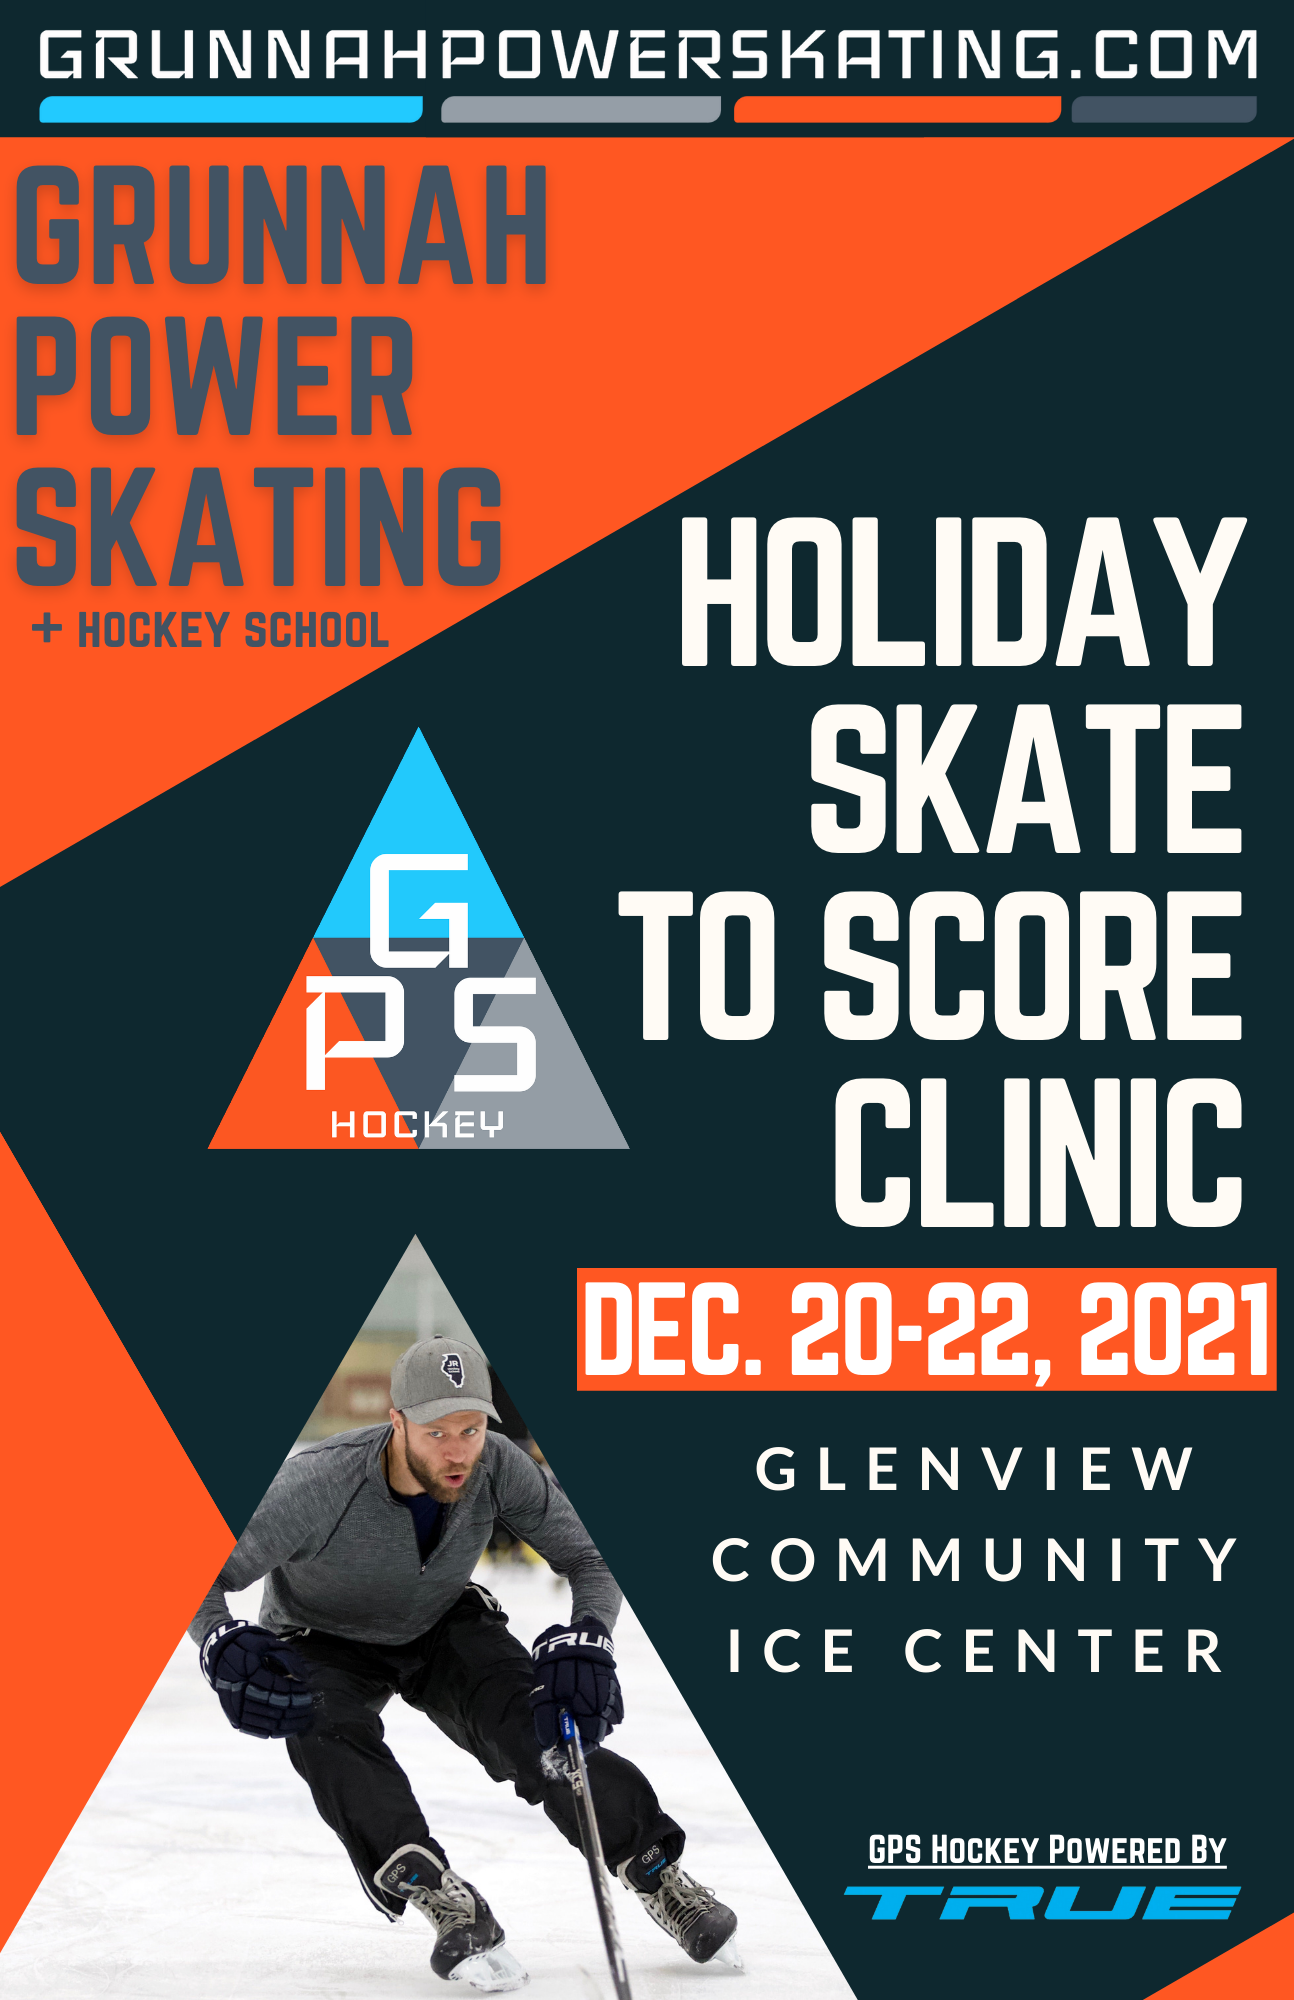 A flyer for Grunnah Power Skating hockey camp in December 2021